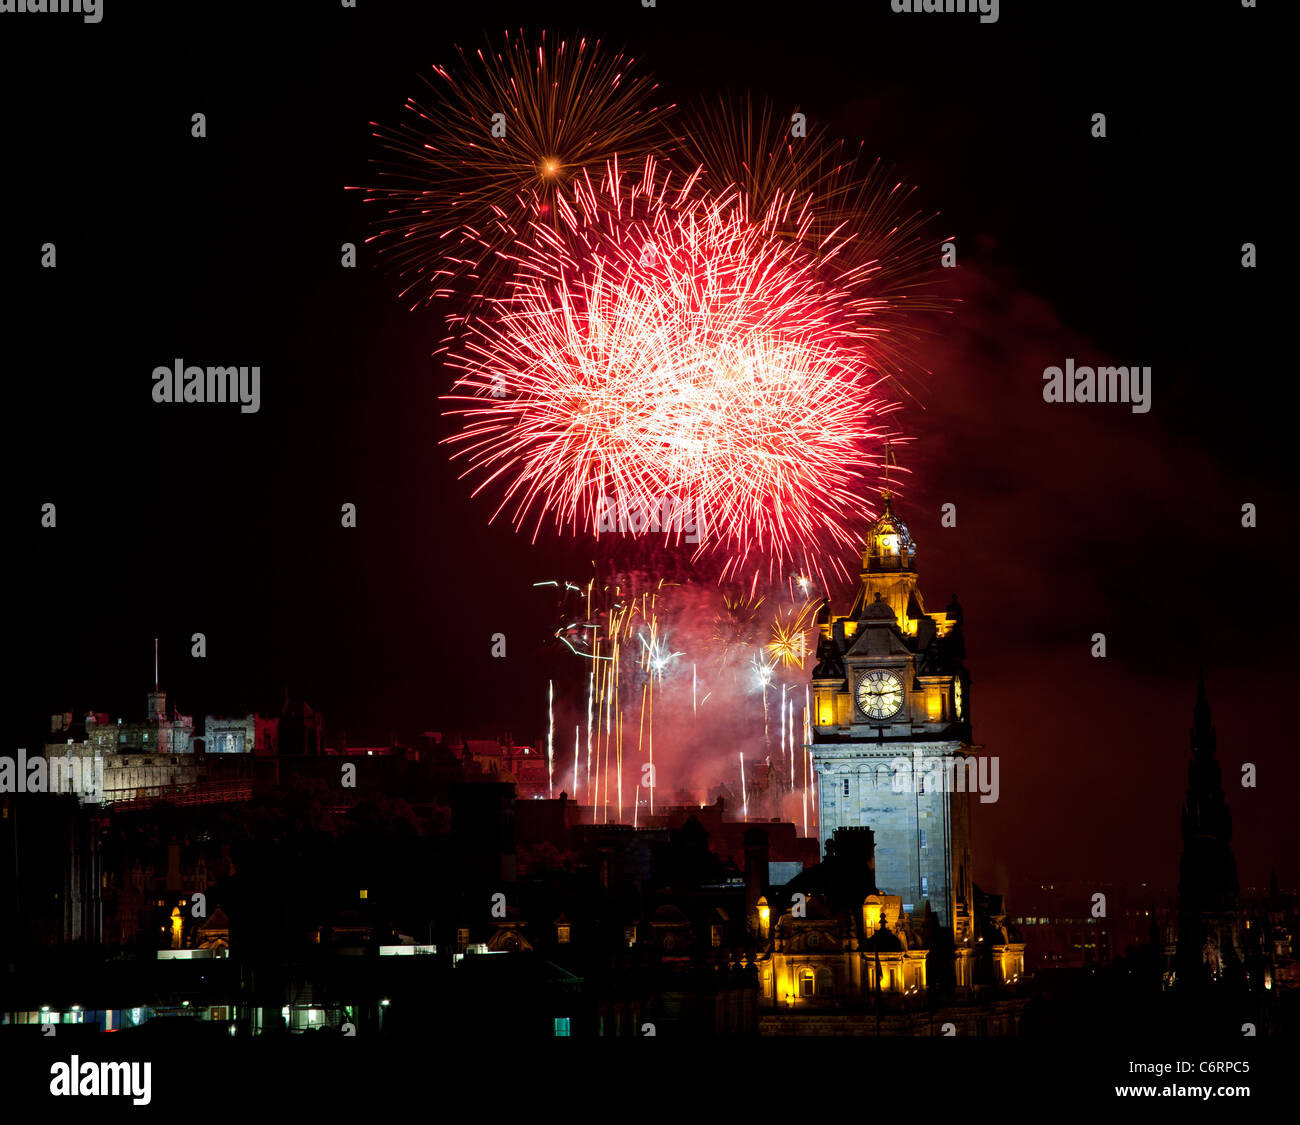 2011 Virgin Money Fireworks display Concert display explosive finale to the Edinburgh International Festival, Scotland UK Stock Photo